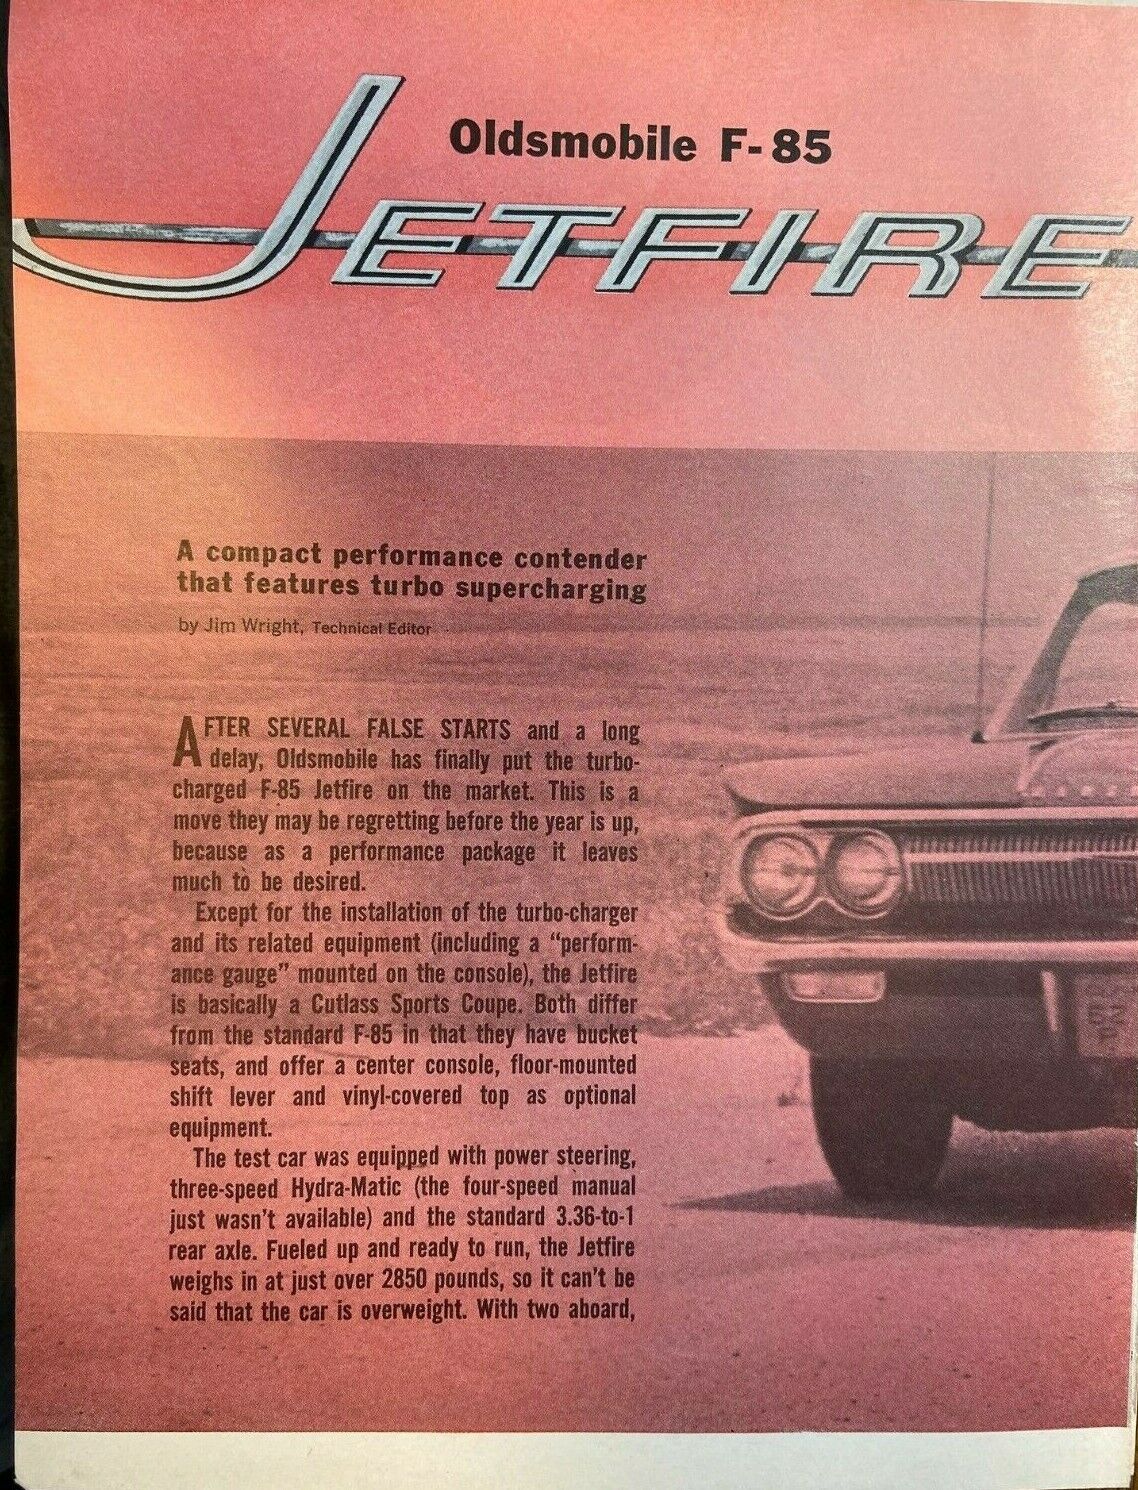 1962 Oldsmobile F-85 Jetfire illustrated